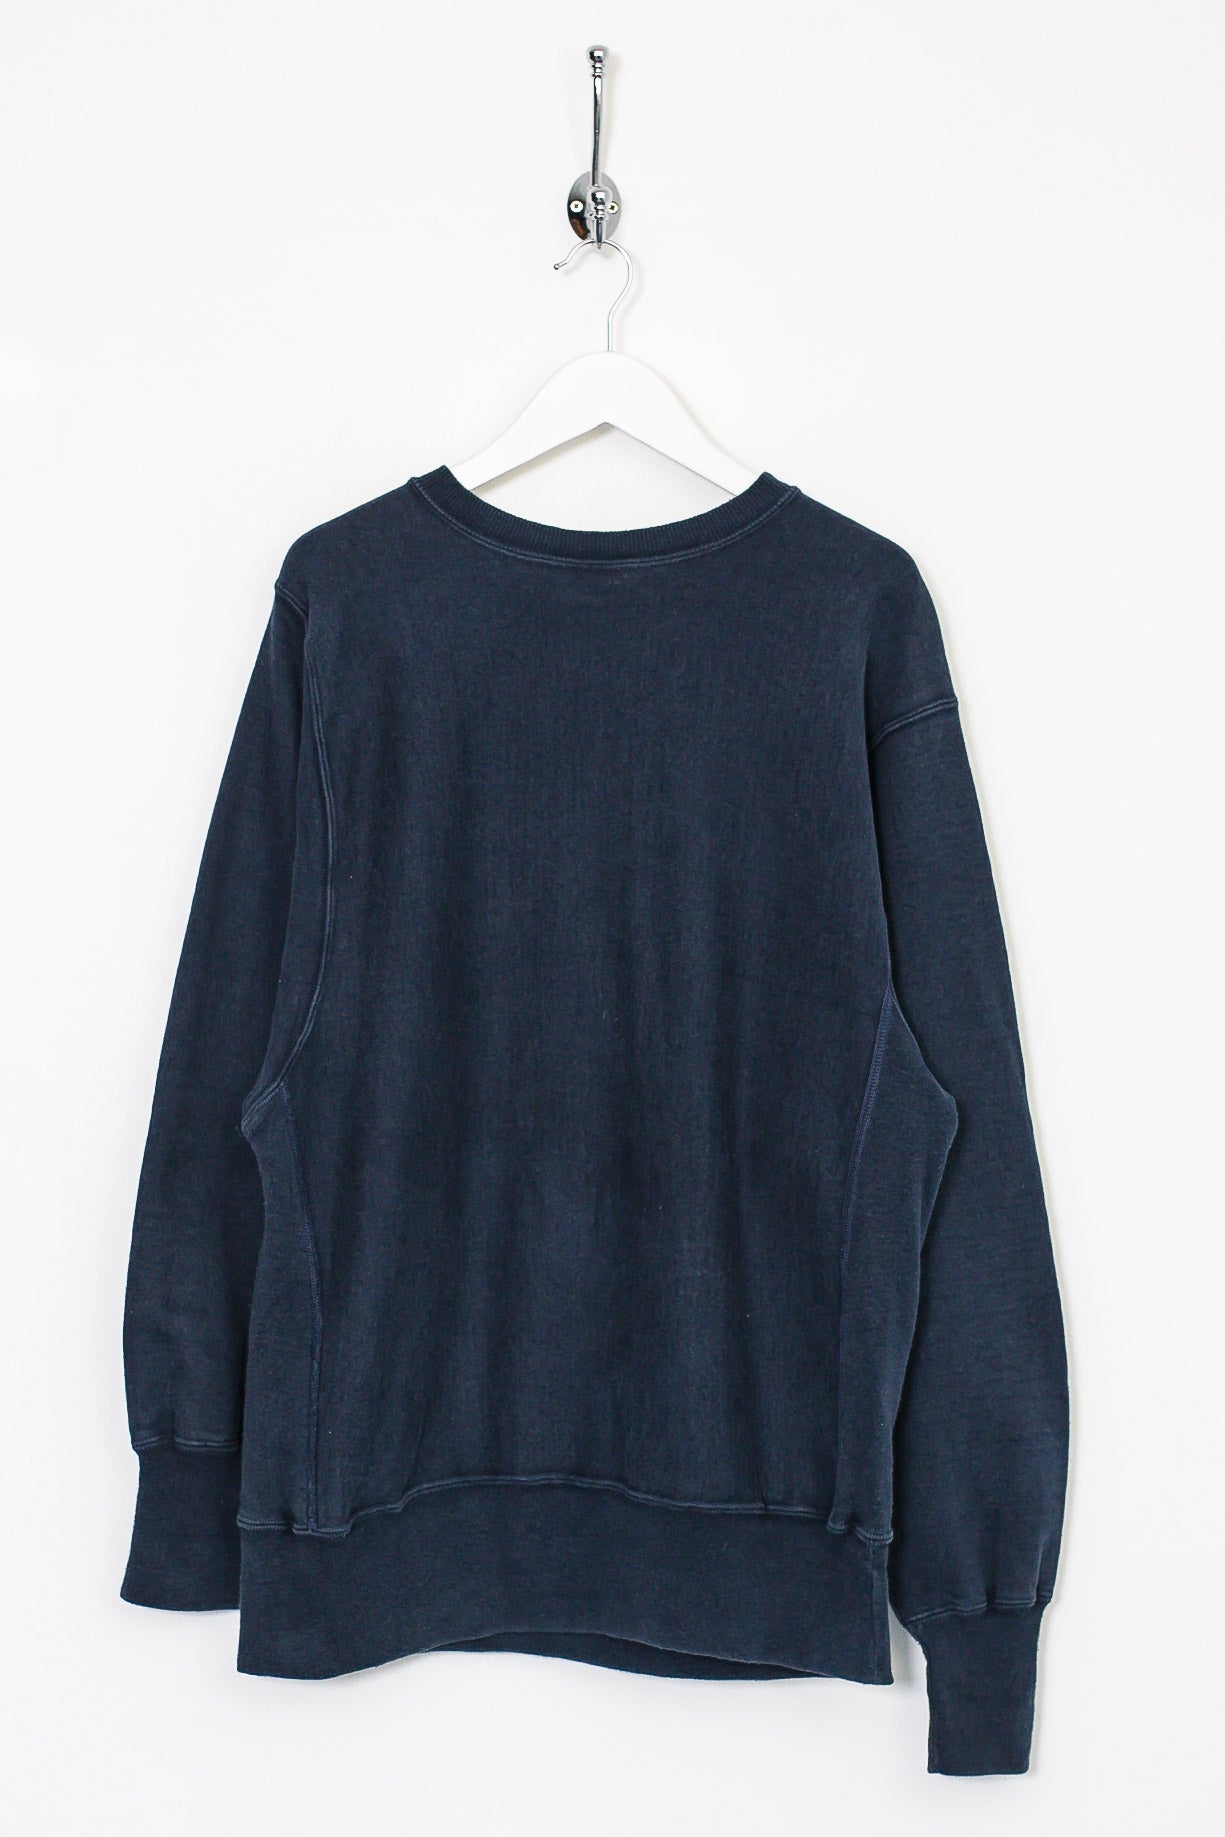 90s Champion Reverse Weave Sweatshirt (M) – Stocked Vintage